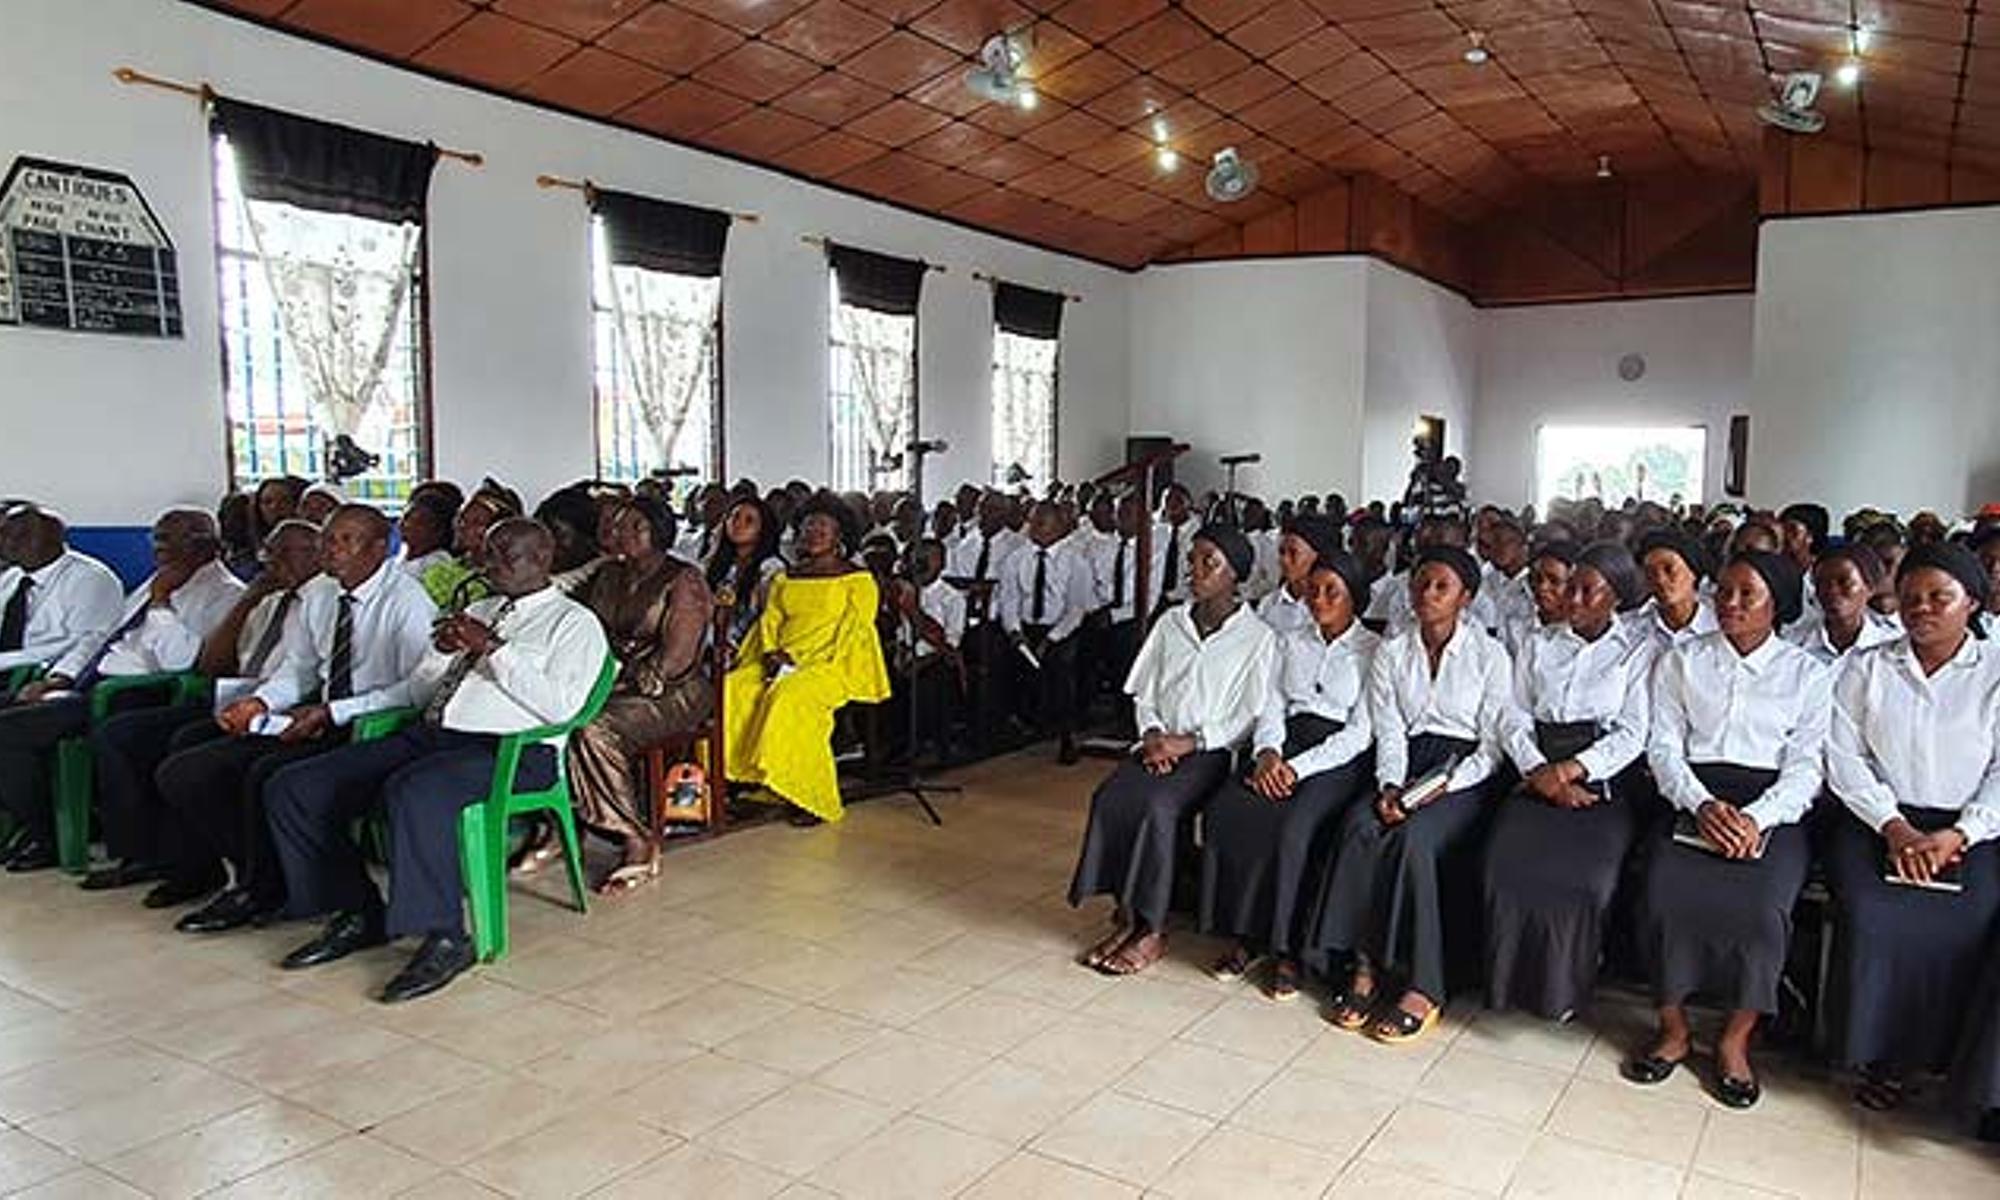 Gottesdienst in der Kirche Conakry Cite de l'Air (Guinea)